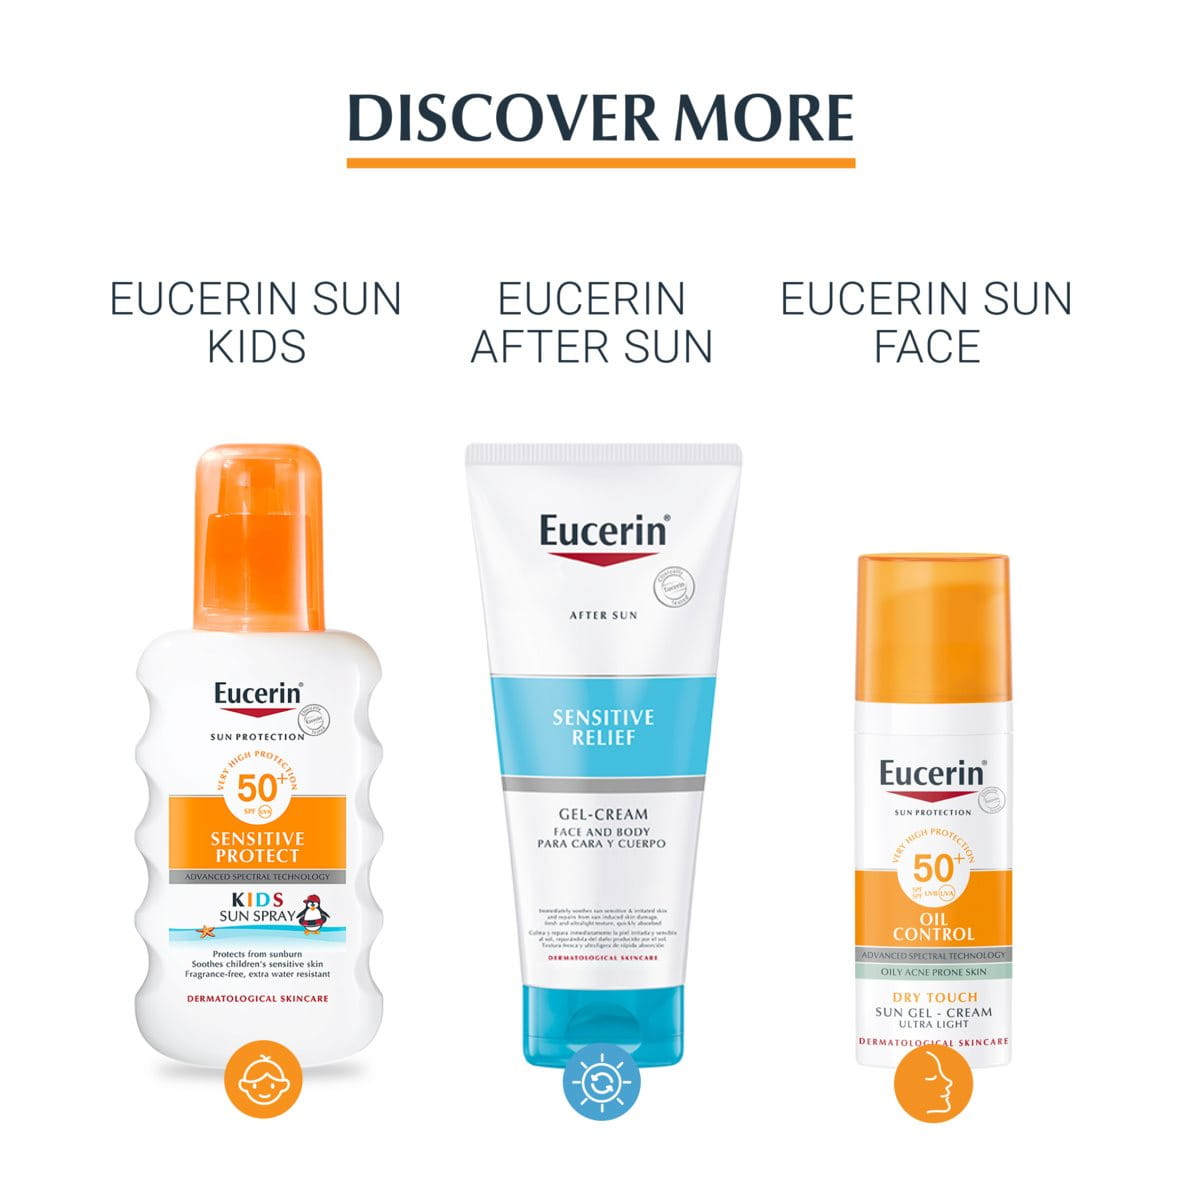 Sun | Allergy Protection Sun SPF | Sunscreen